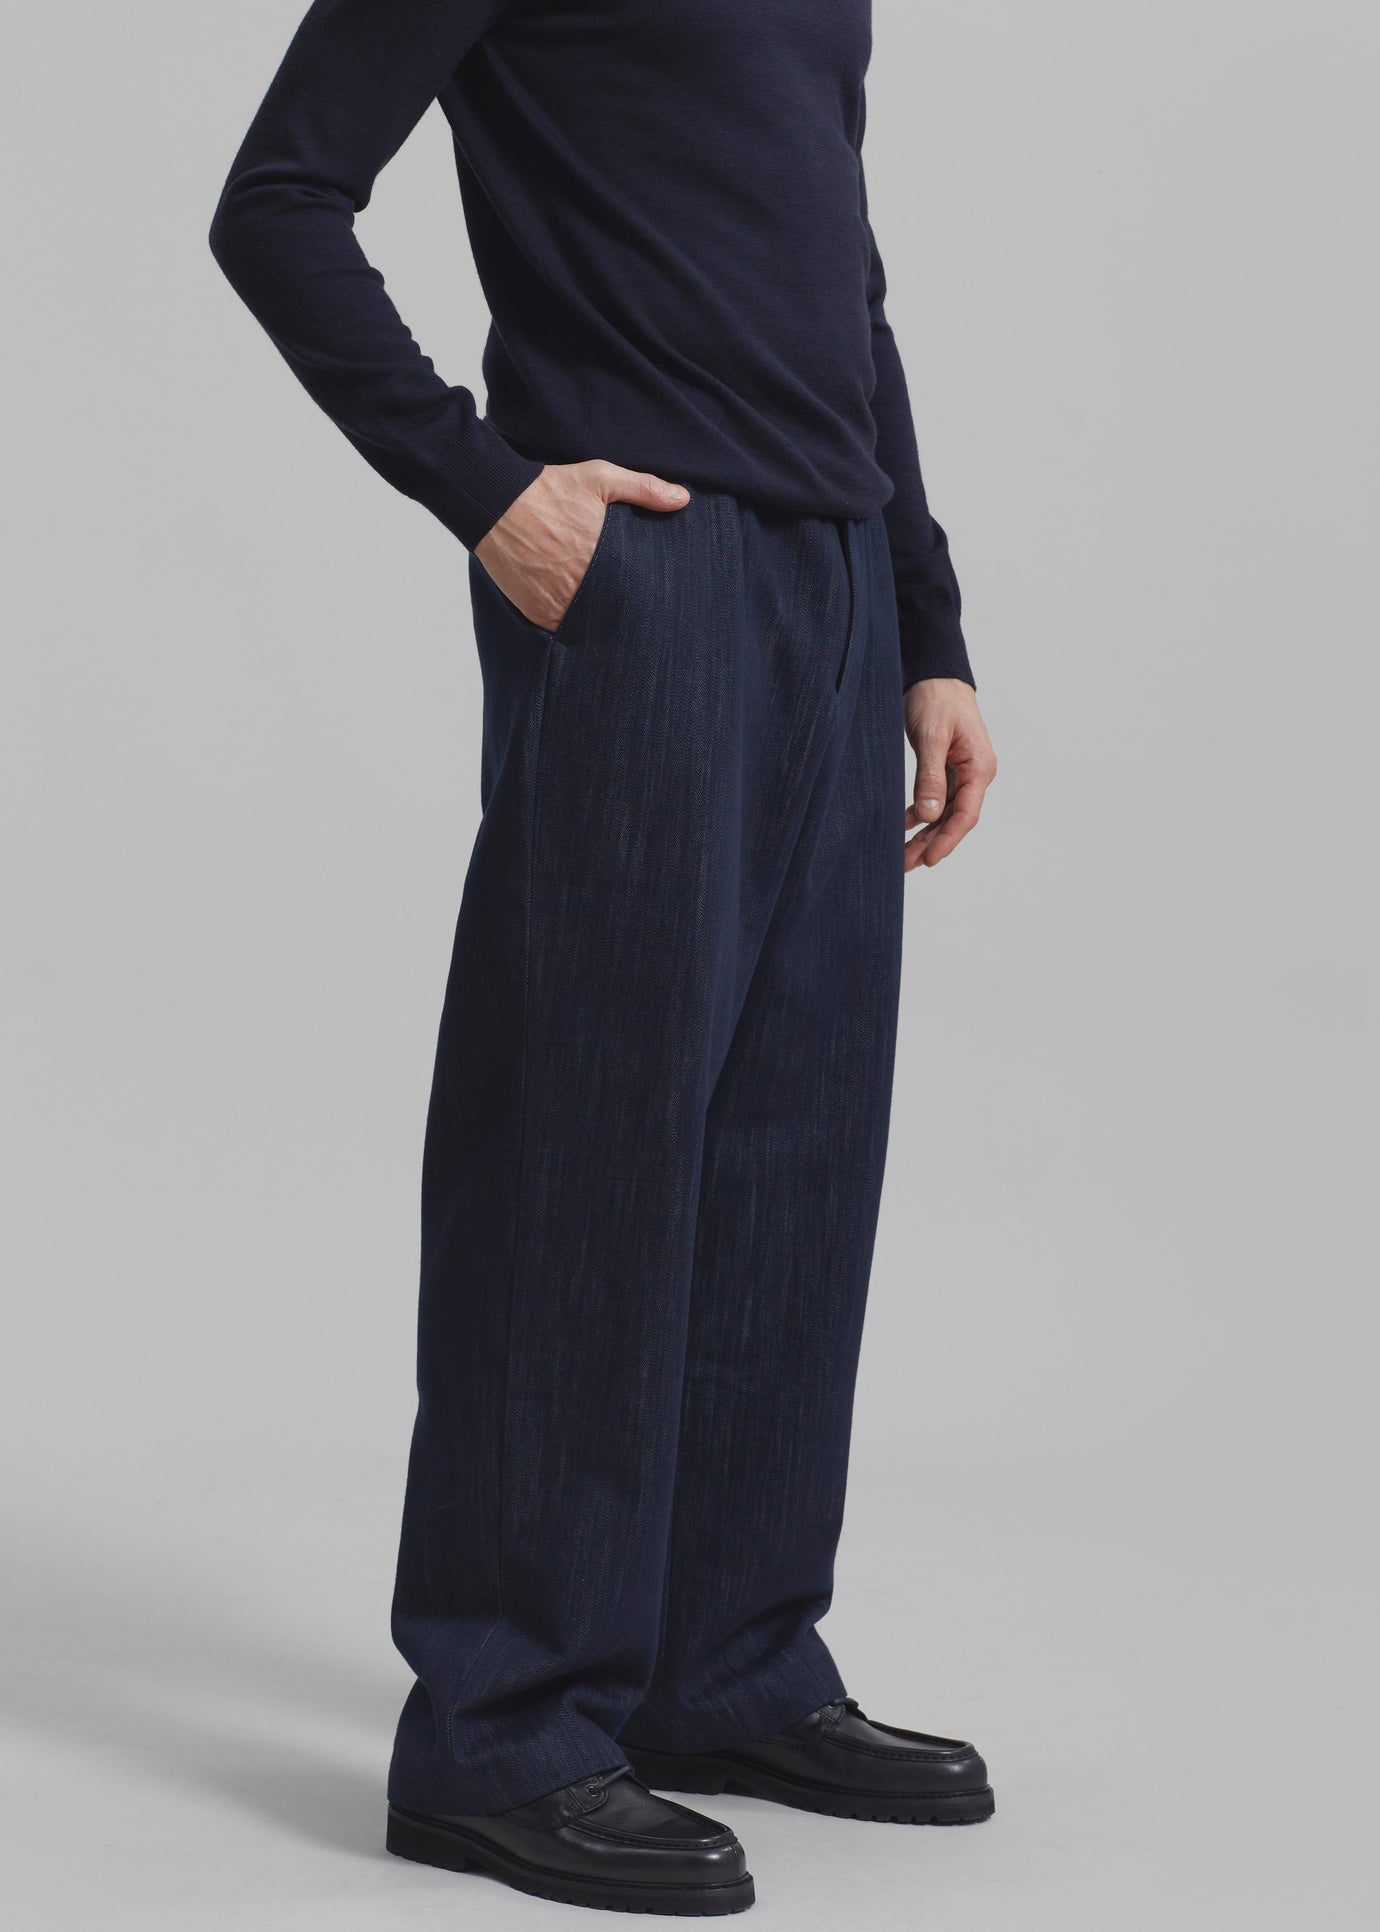 Soojun Mens Casual Loose Fit Elastic Waist Jeans Denim Pants, Deep Blue,  30W x 28L at  Men's Clothing store